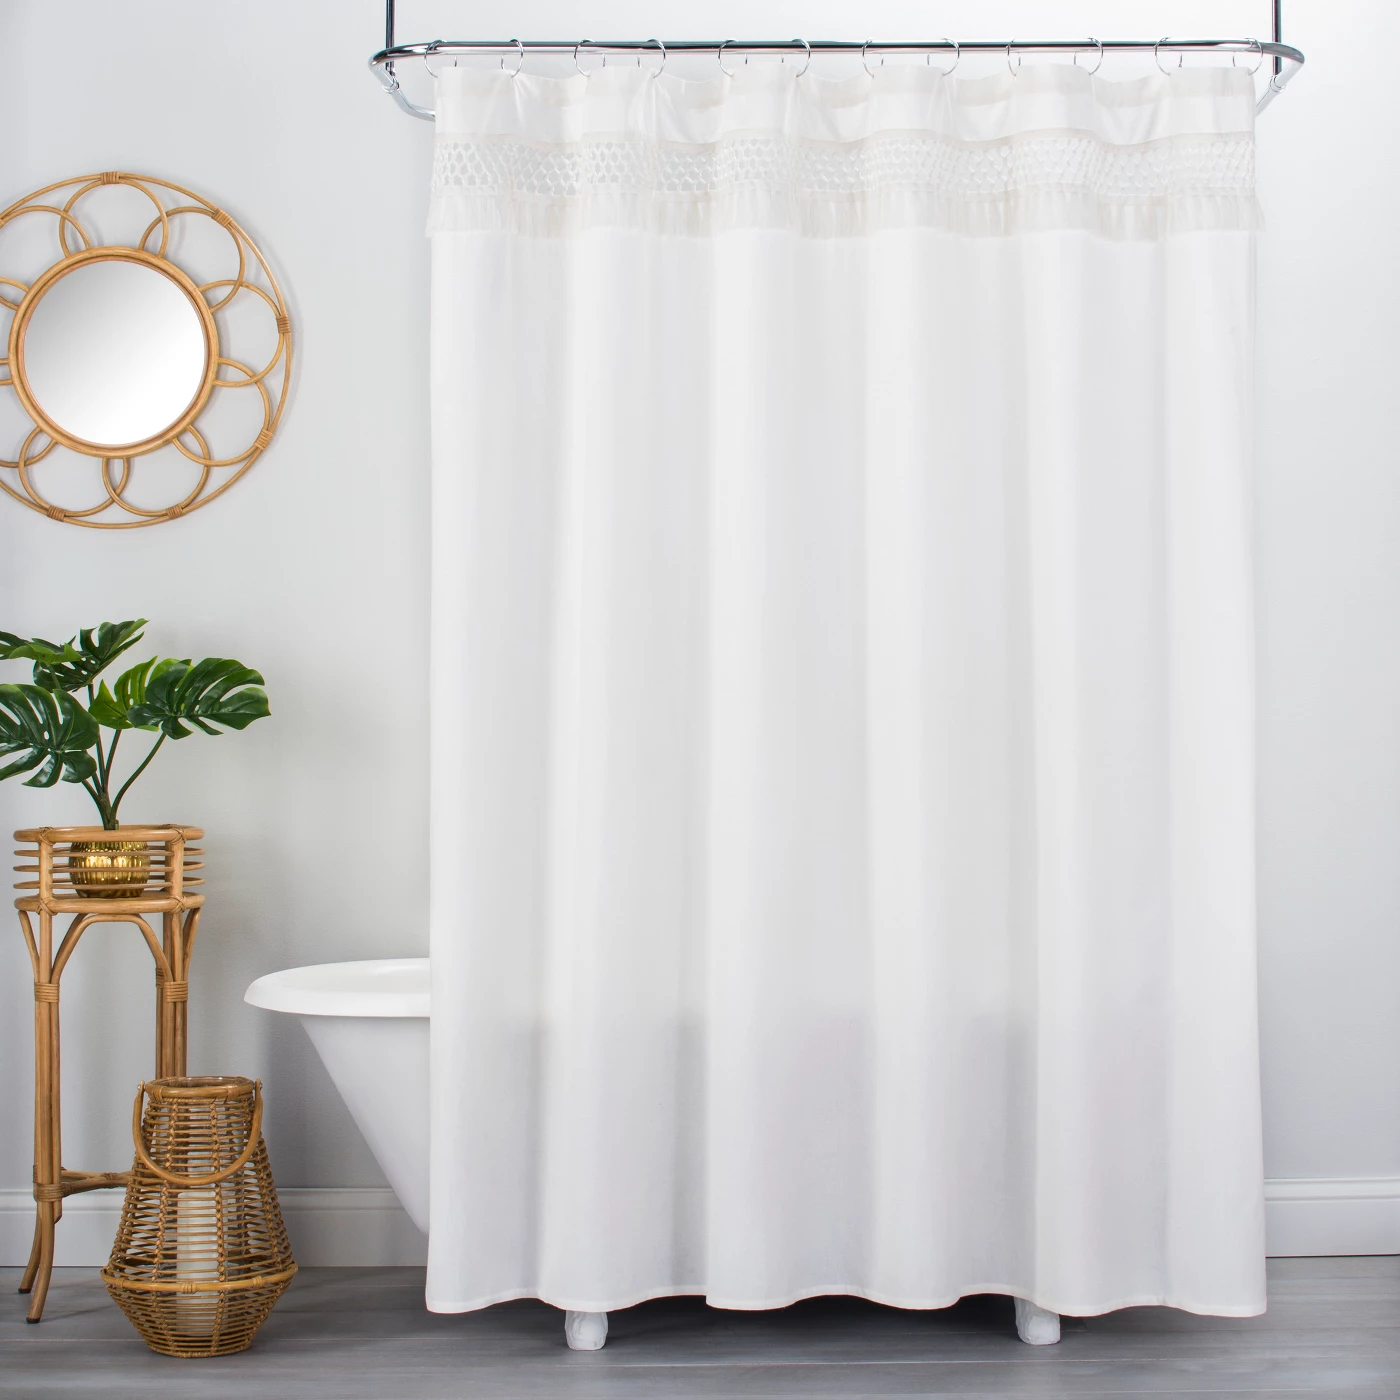 Macramé Shower Curtain Cream - Opalhouse™ - image 2 of 3